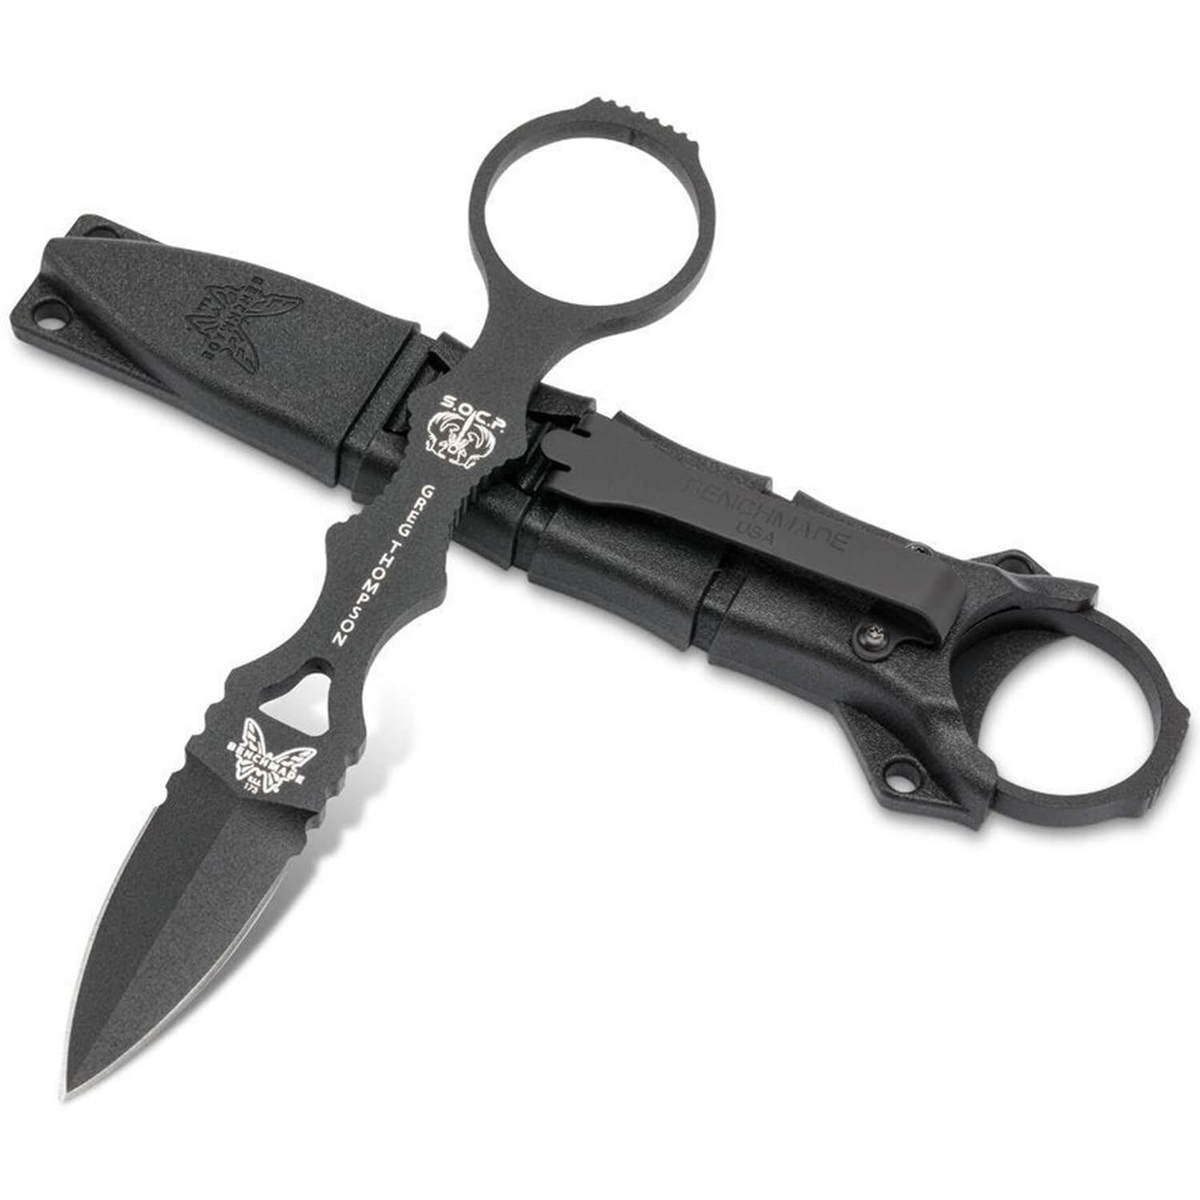 Benchmade - 173BK mini SOCP Knife - Double-Edged Dagger Blade - Plain Edge - Black Coated Handle